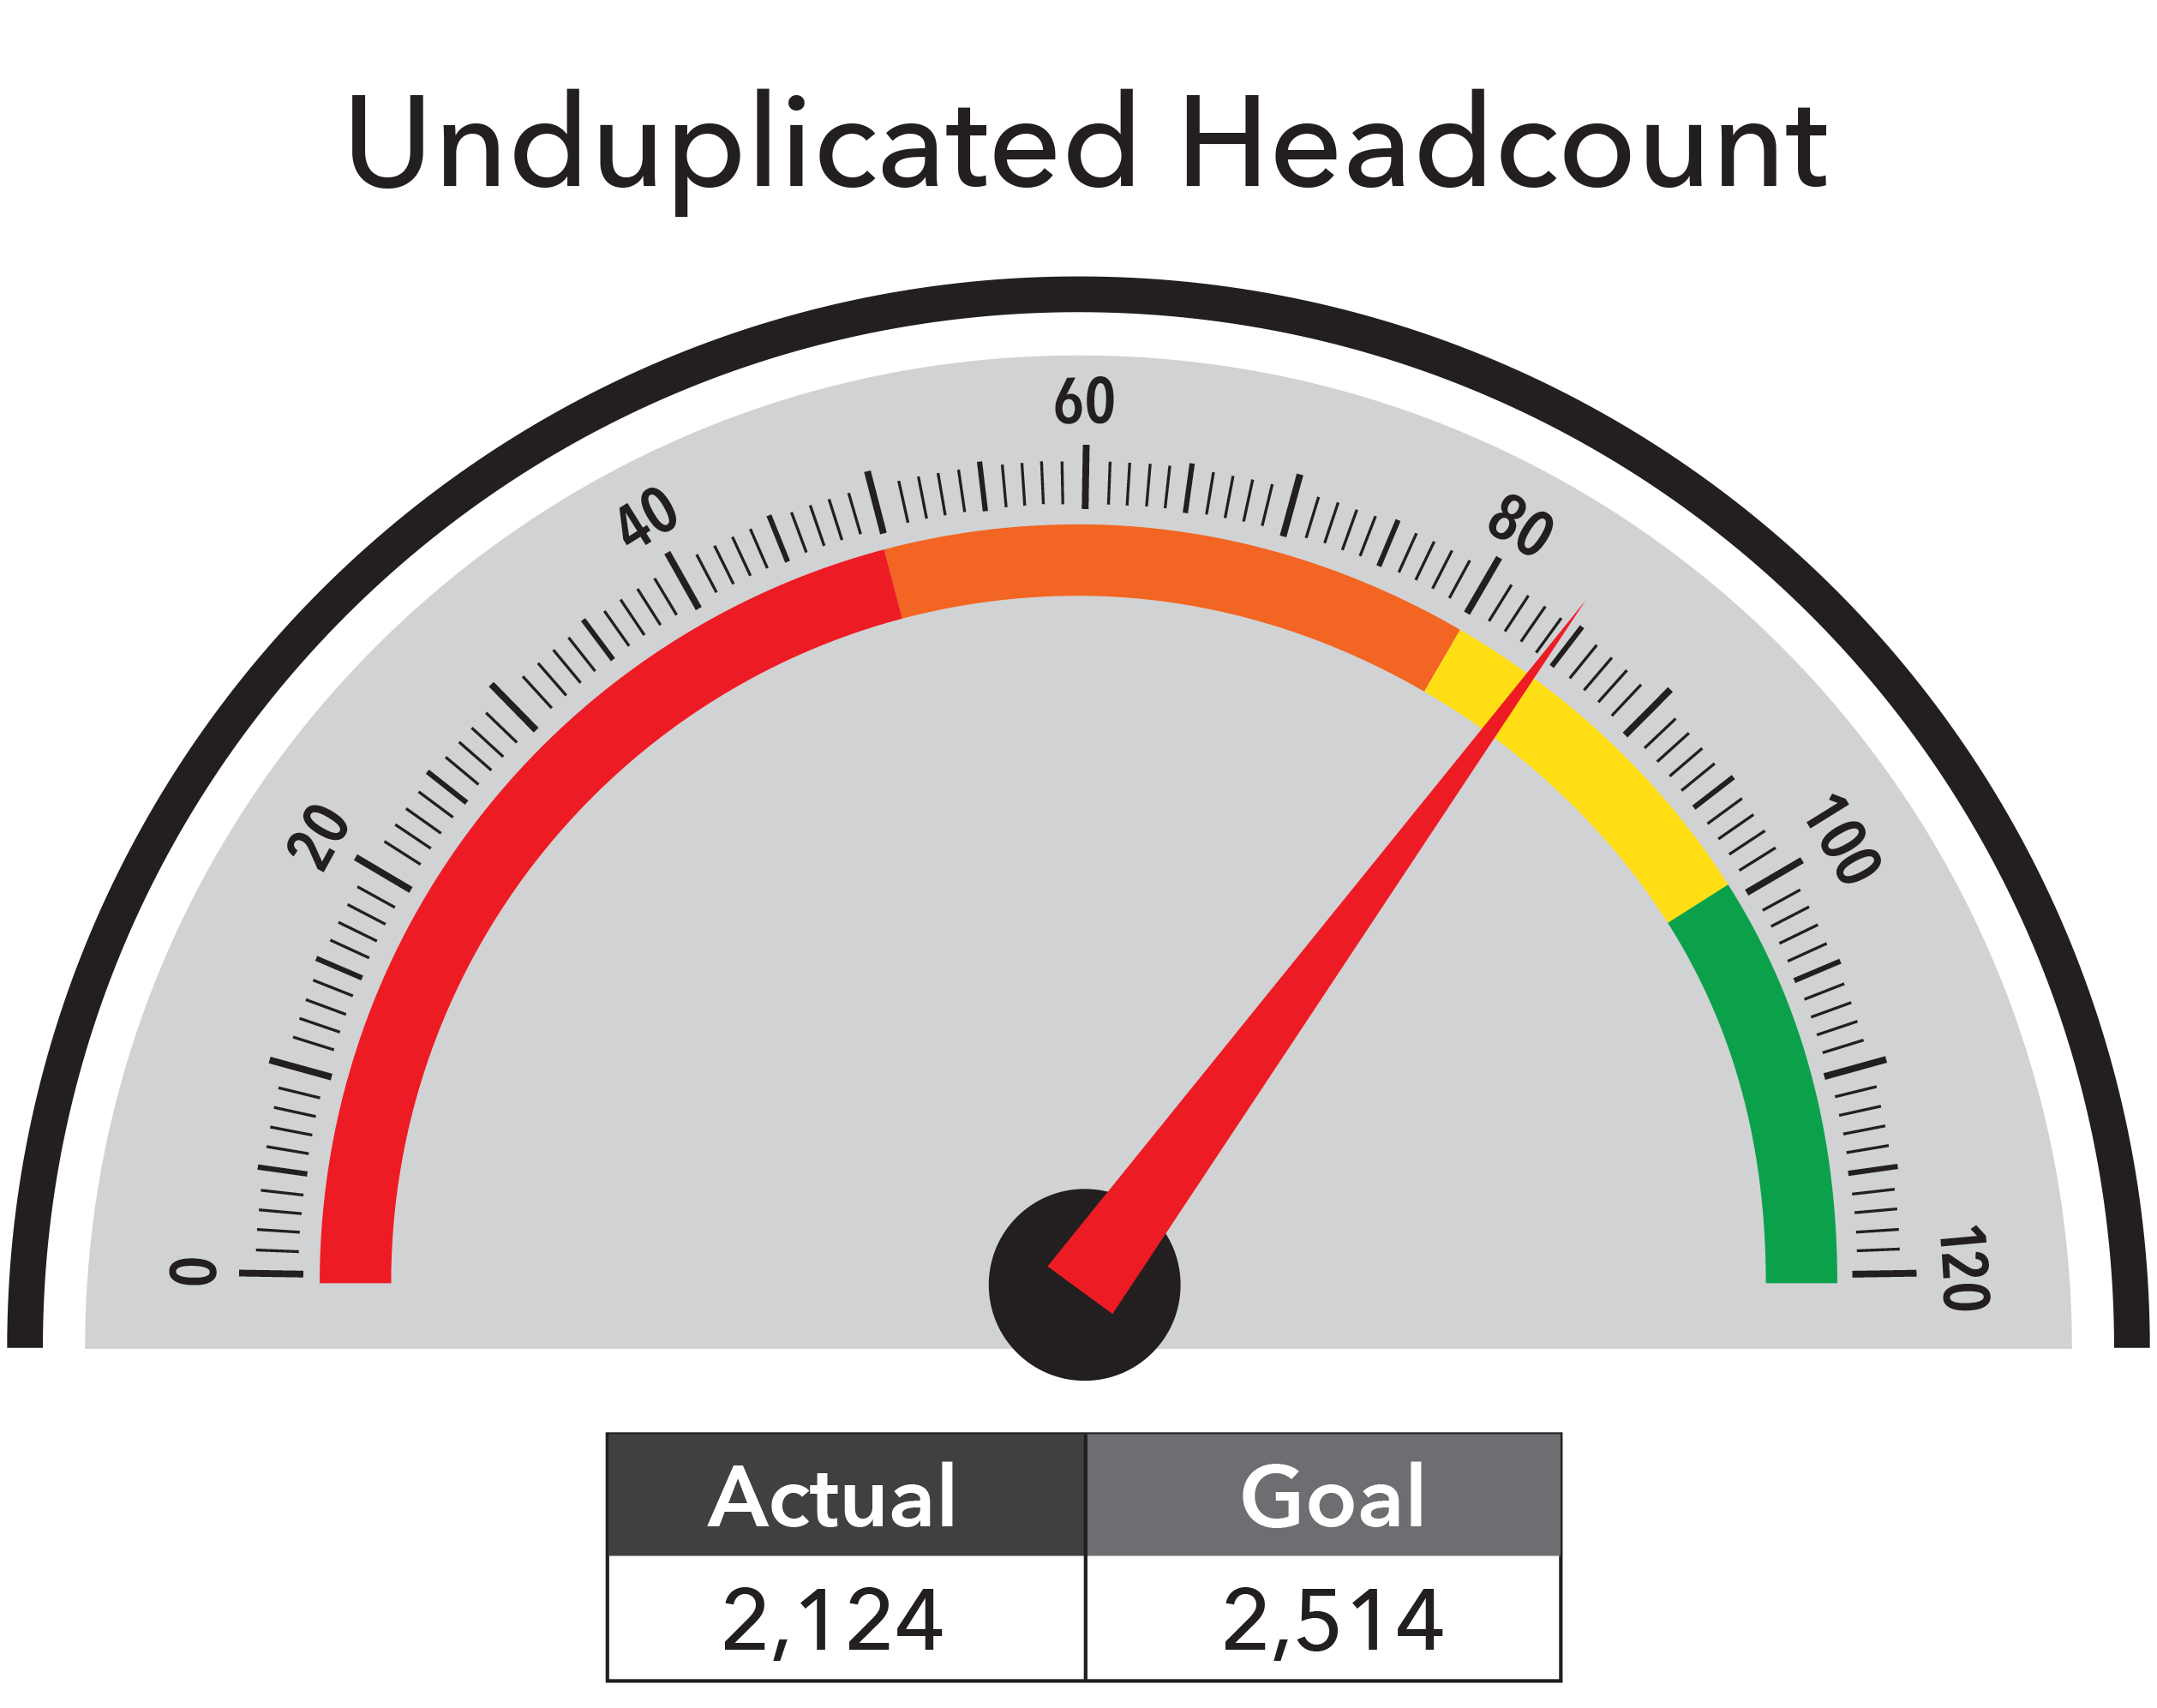 Unduplicated Headcount - Actual 2514, Goal 2394